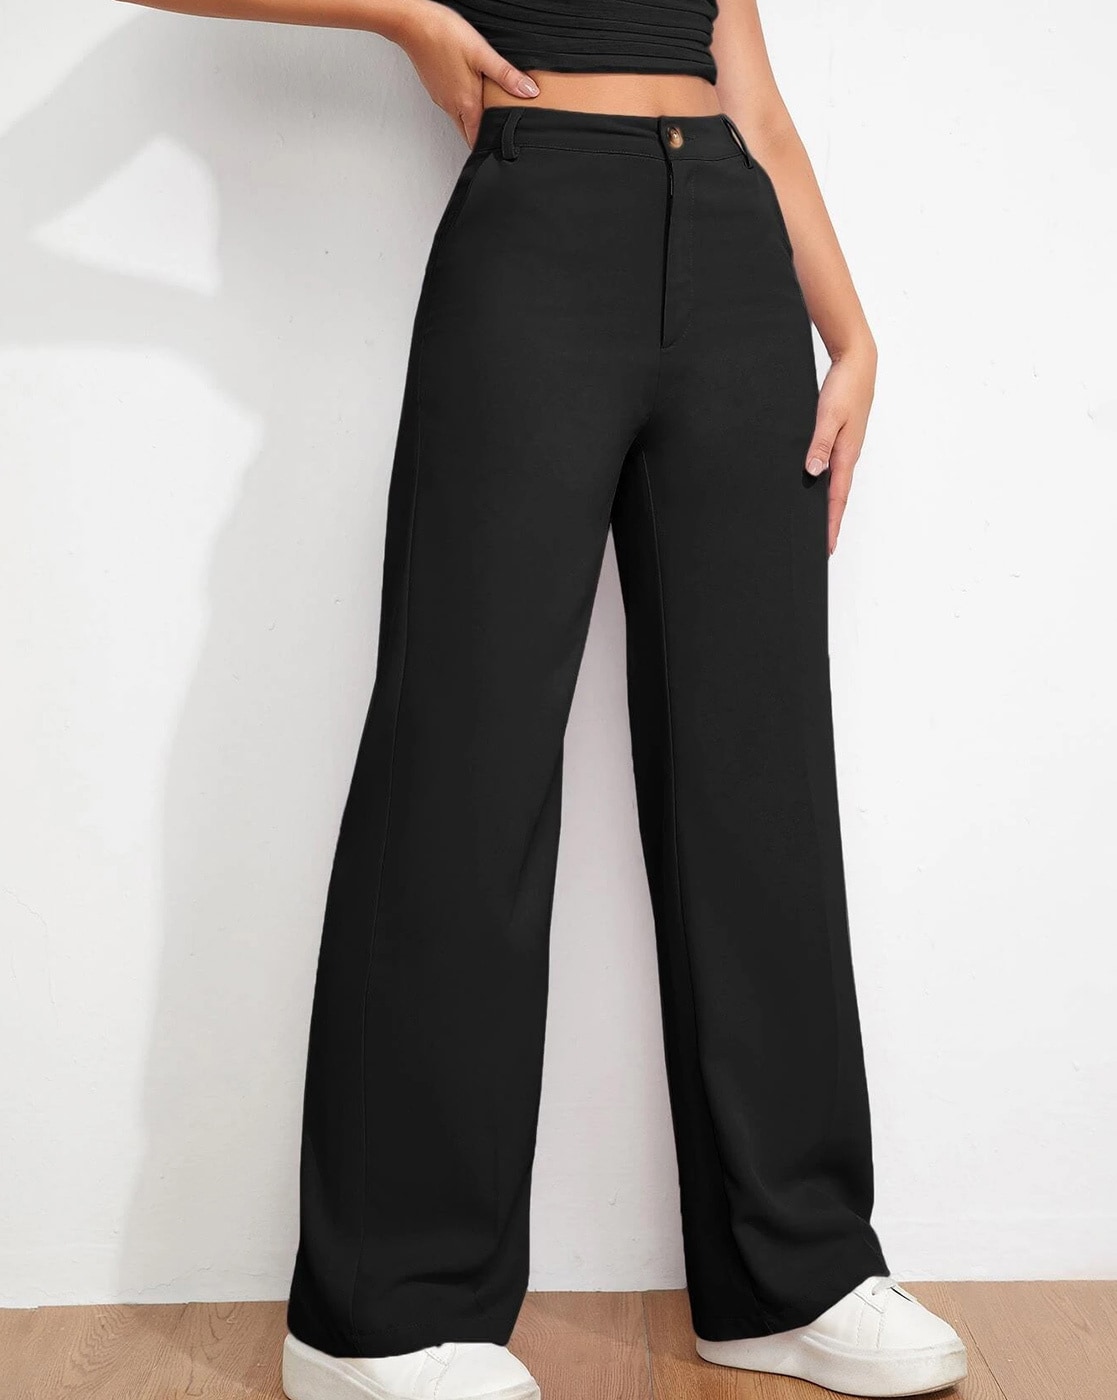 Buy Linen Pants Women Cotton Linen Elastic Waist Drawstring Long Casual  Wide Leg Pants at Amazon.in